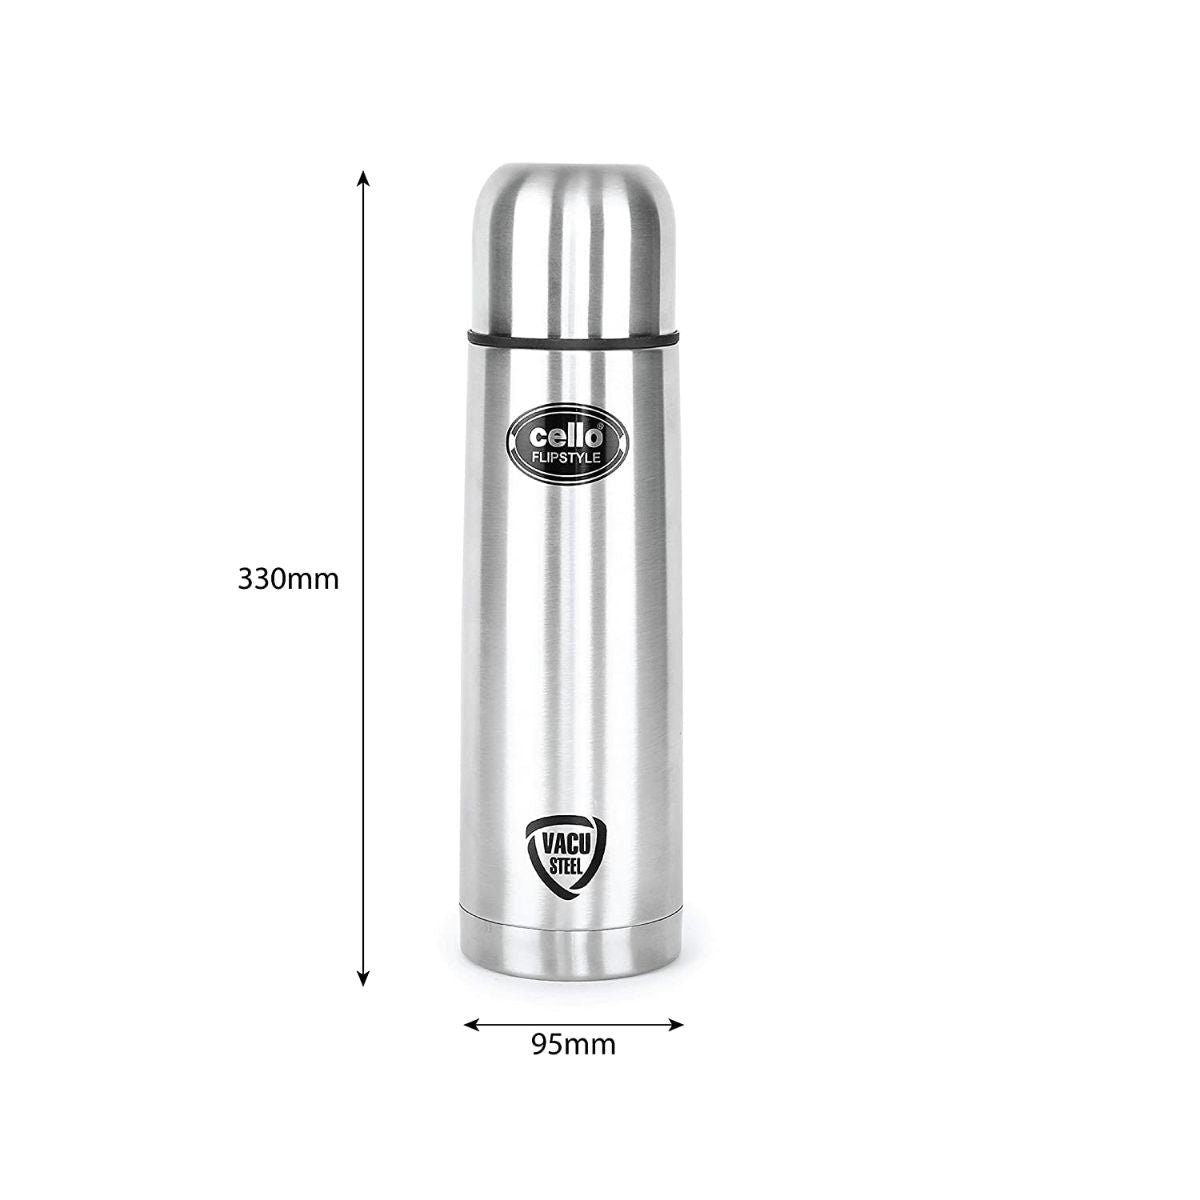 Flipstyle Flask, Vacusteel Water Bottle, 1000ml Silver / 1000ml / Without